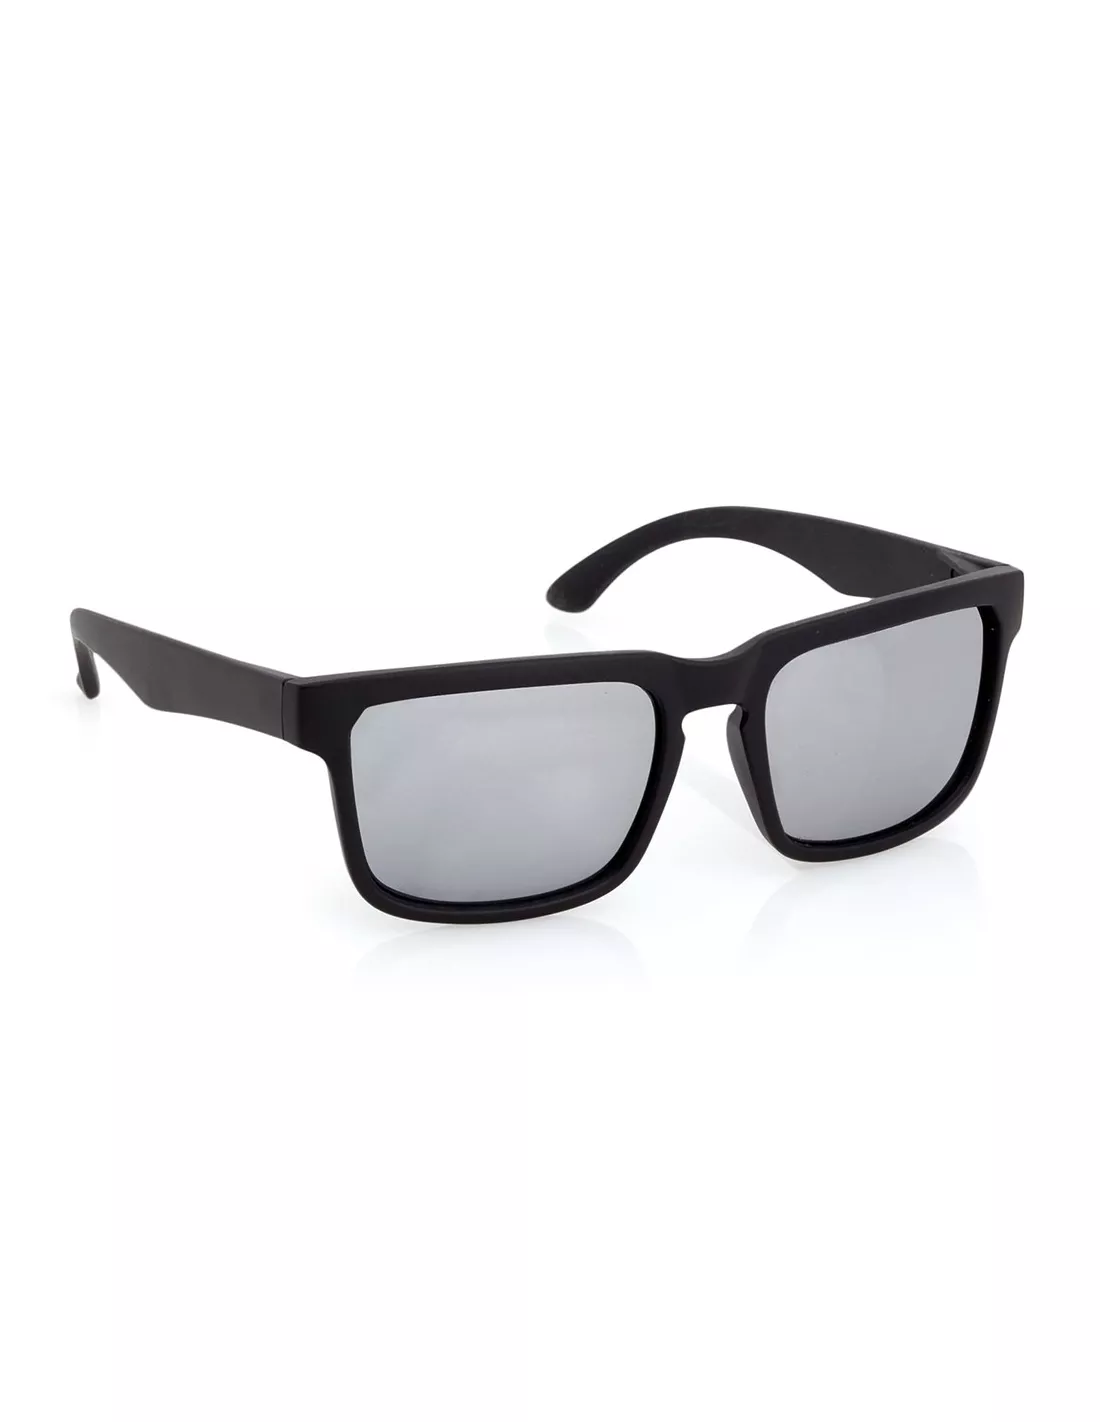 Gafas Verano de Sol  Bunner UV400